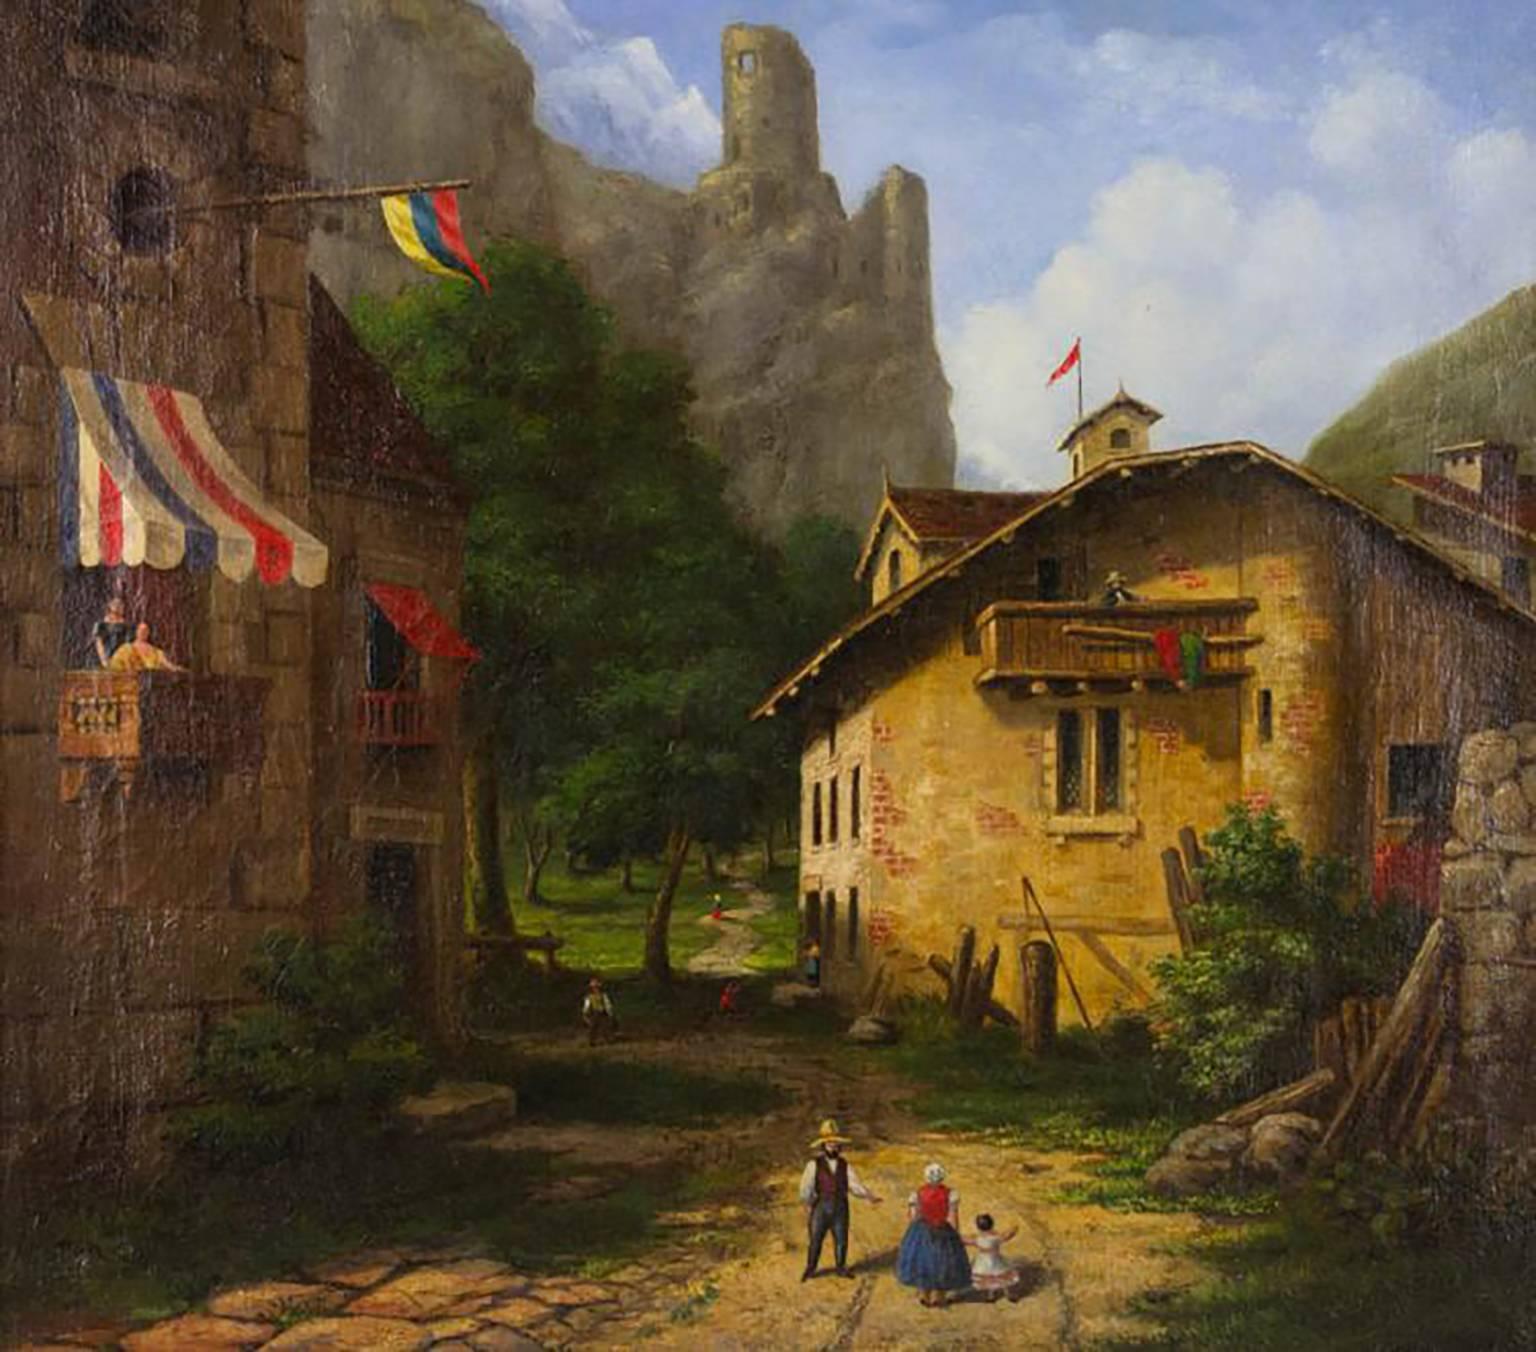 Samuel Kilburn Oil Painting Entitled “Armenian Village” – 1849 - Brown Landscape Painting by Samuel Smith Kilburn